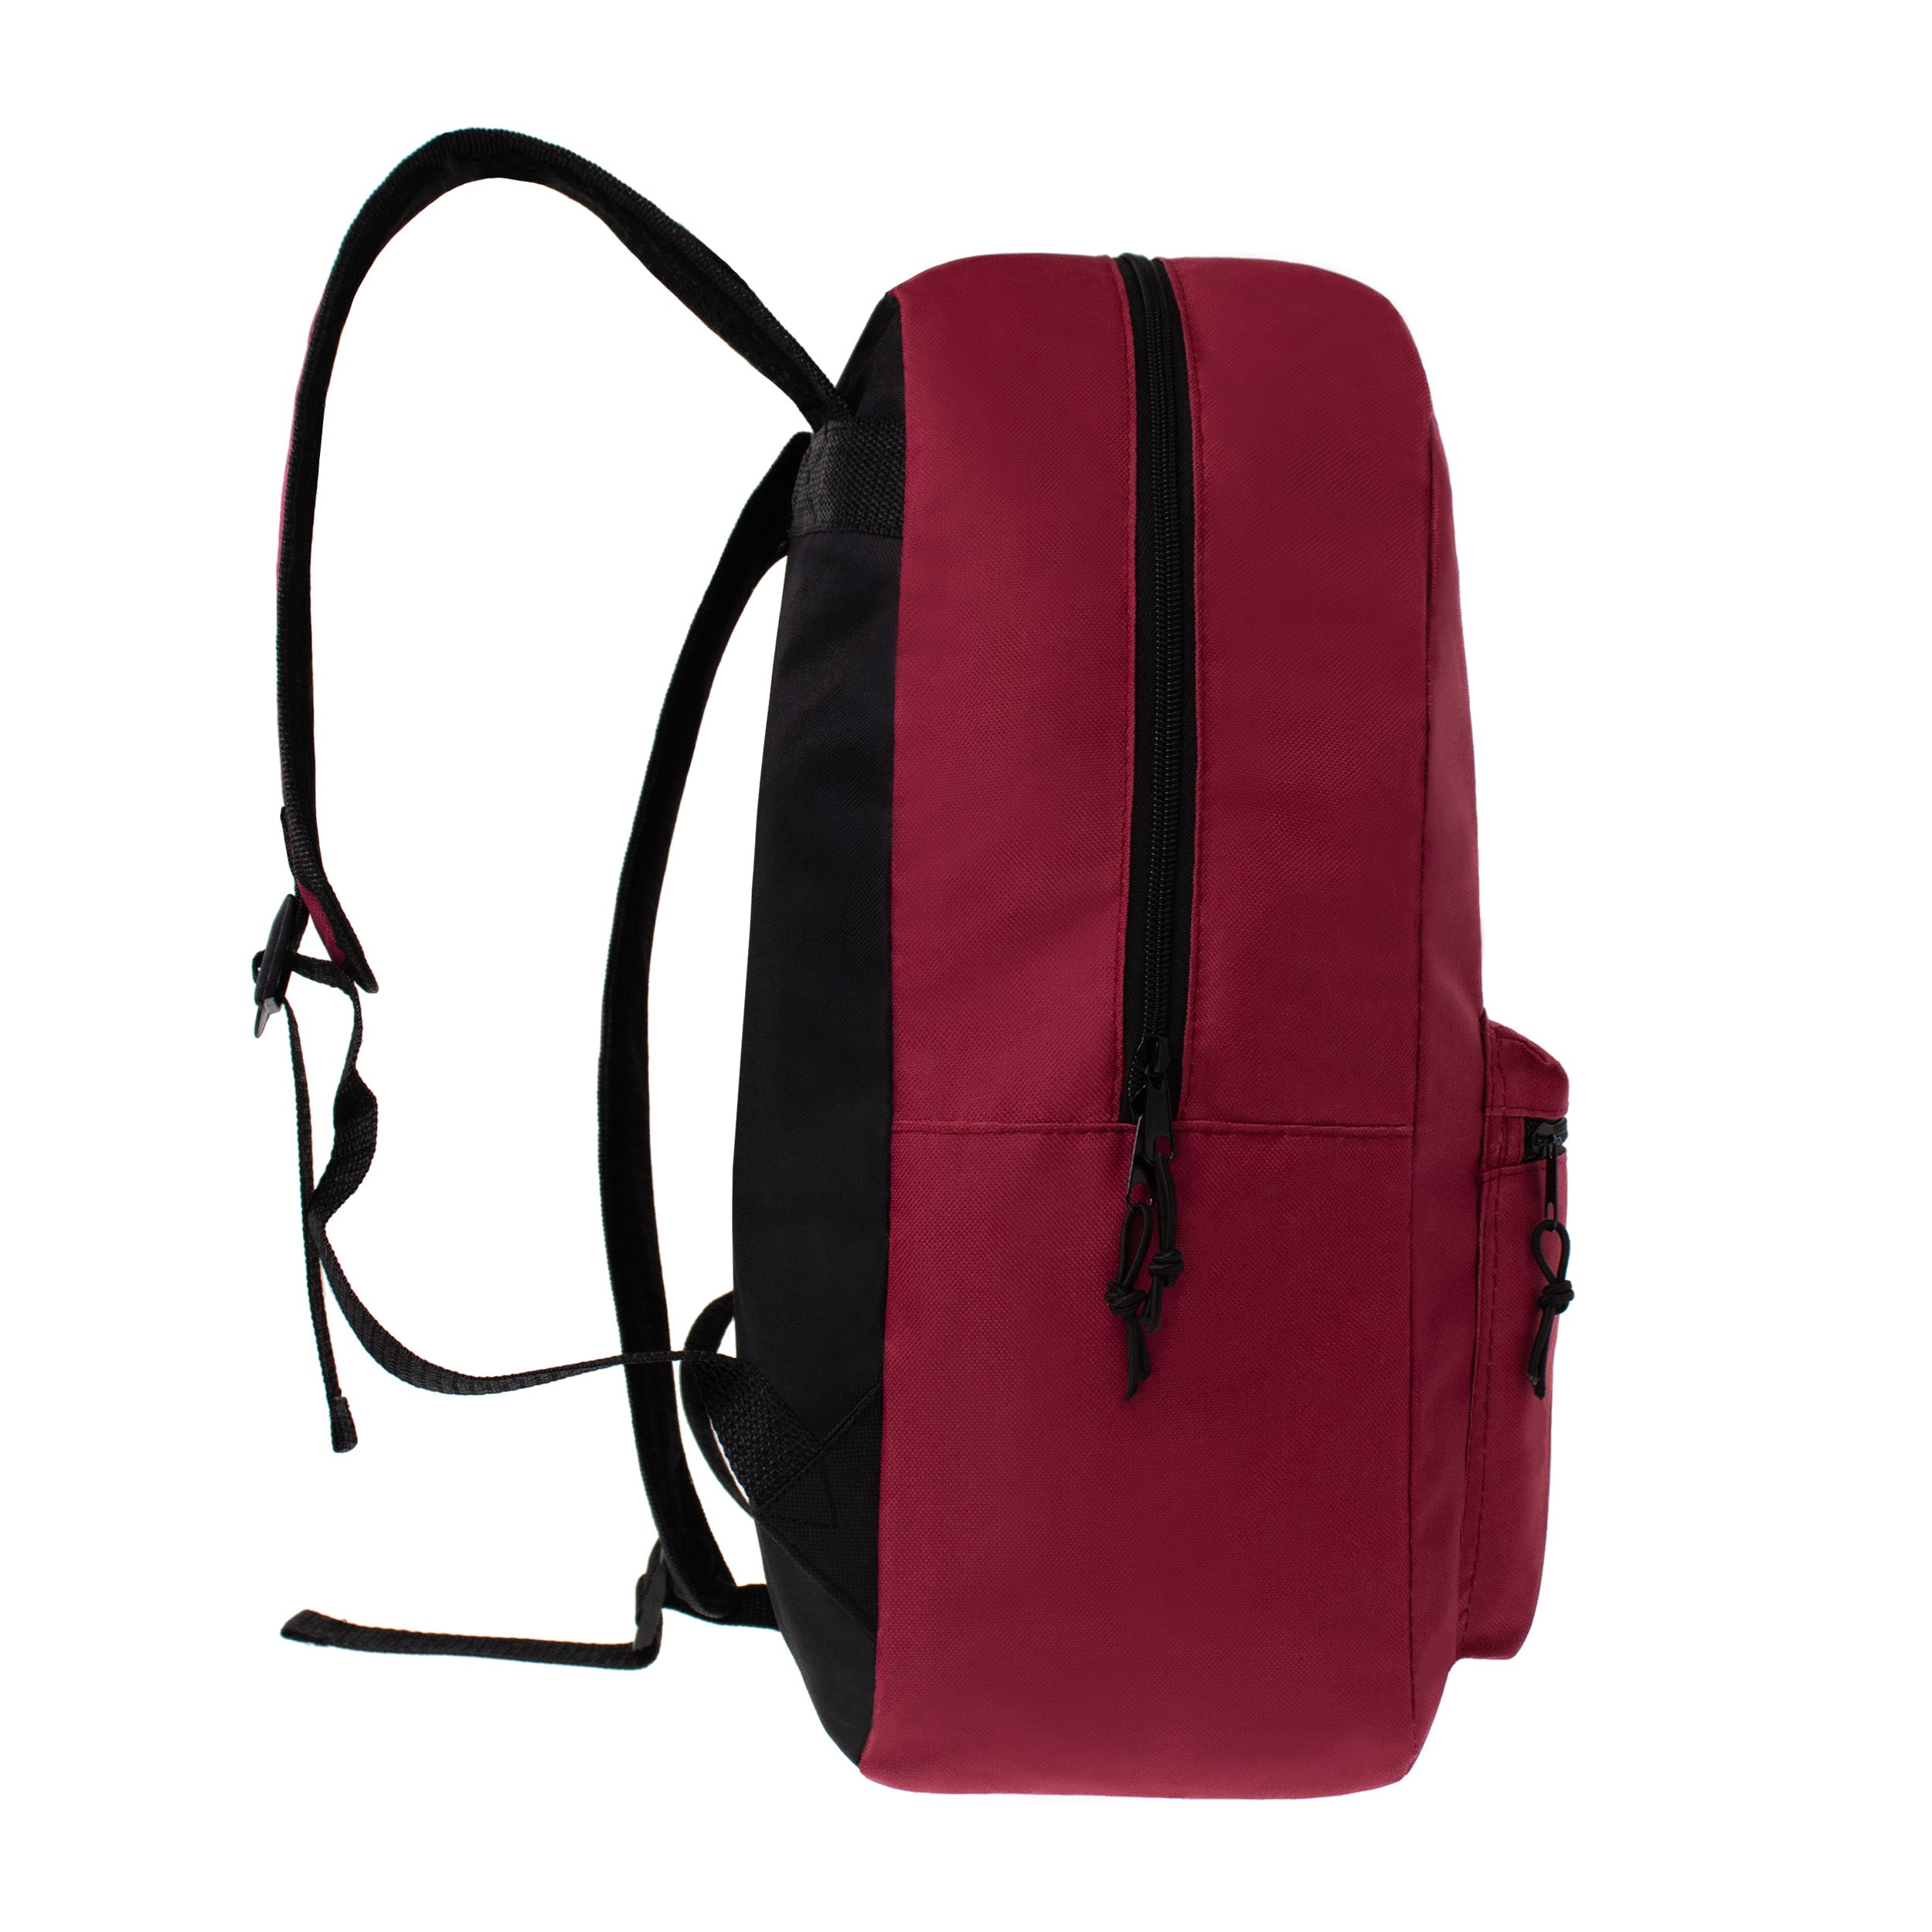 17 Kids Basic Wholesale Backpack in 8 Colors - Bulk Case of 24